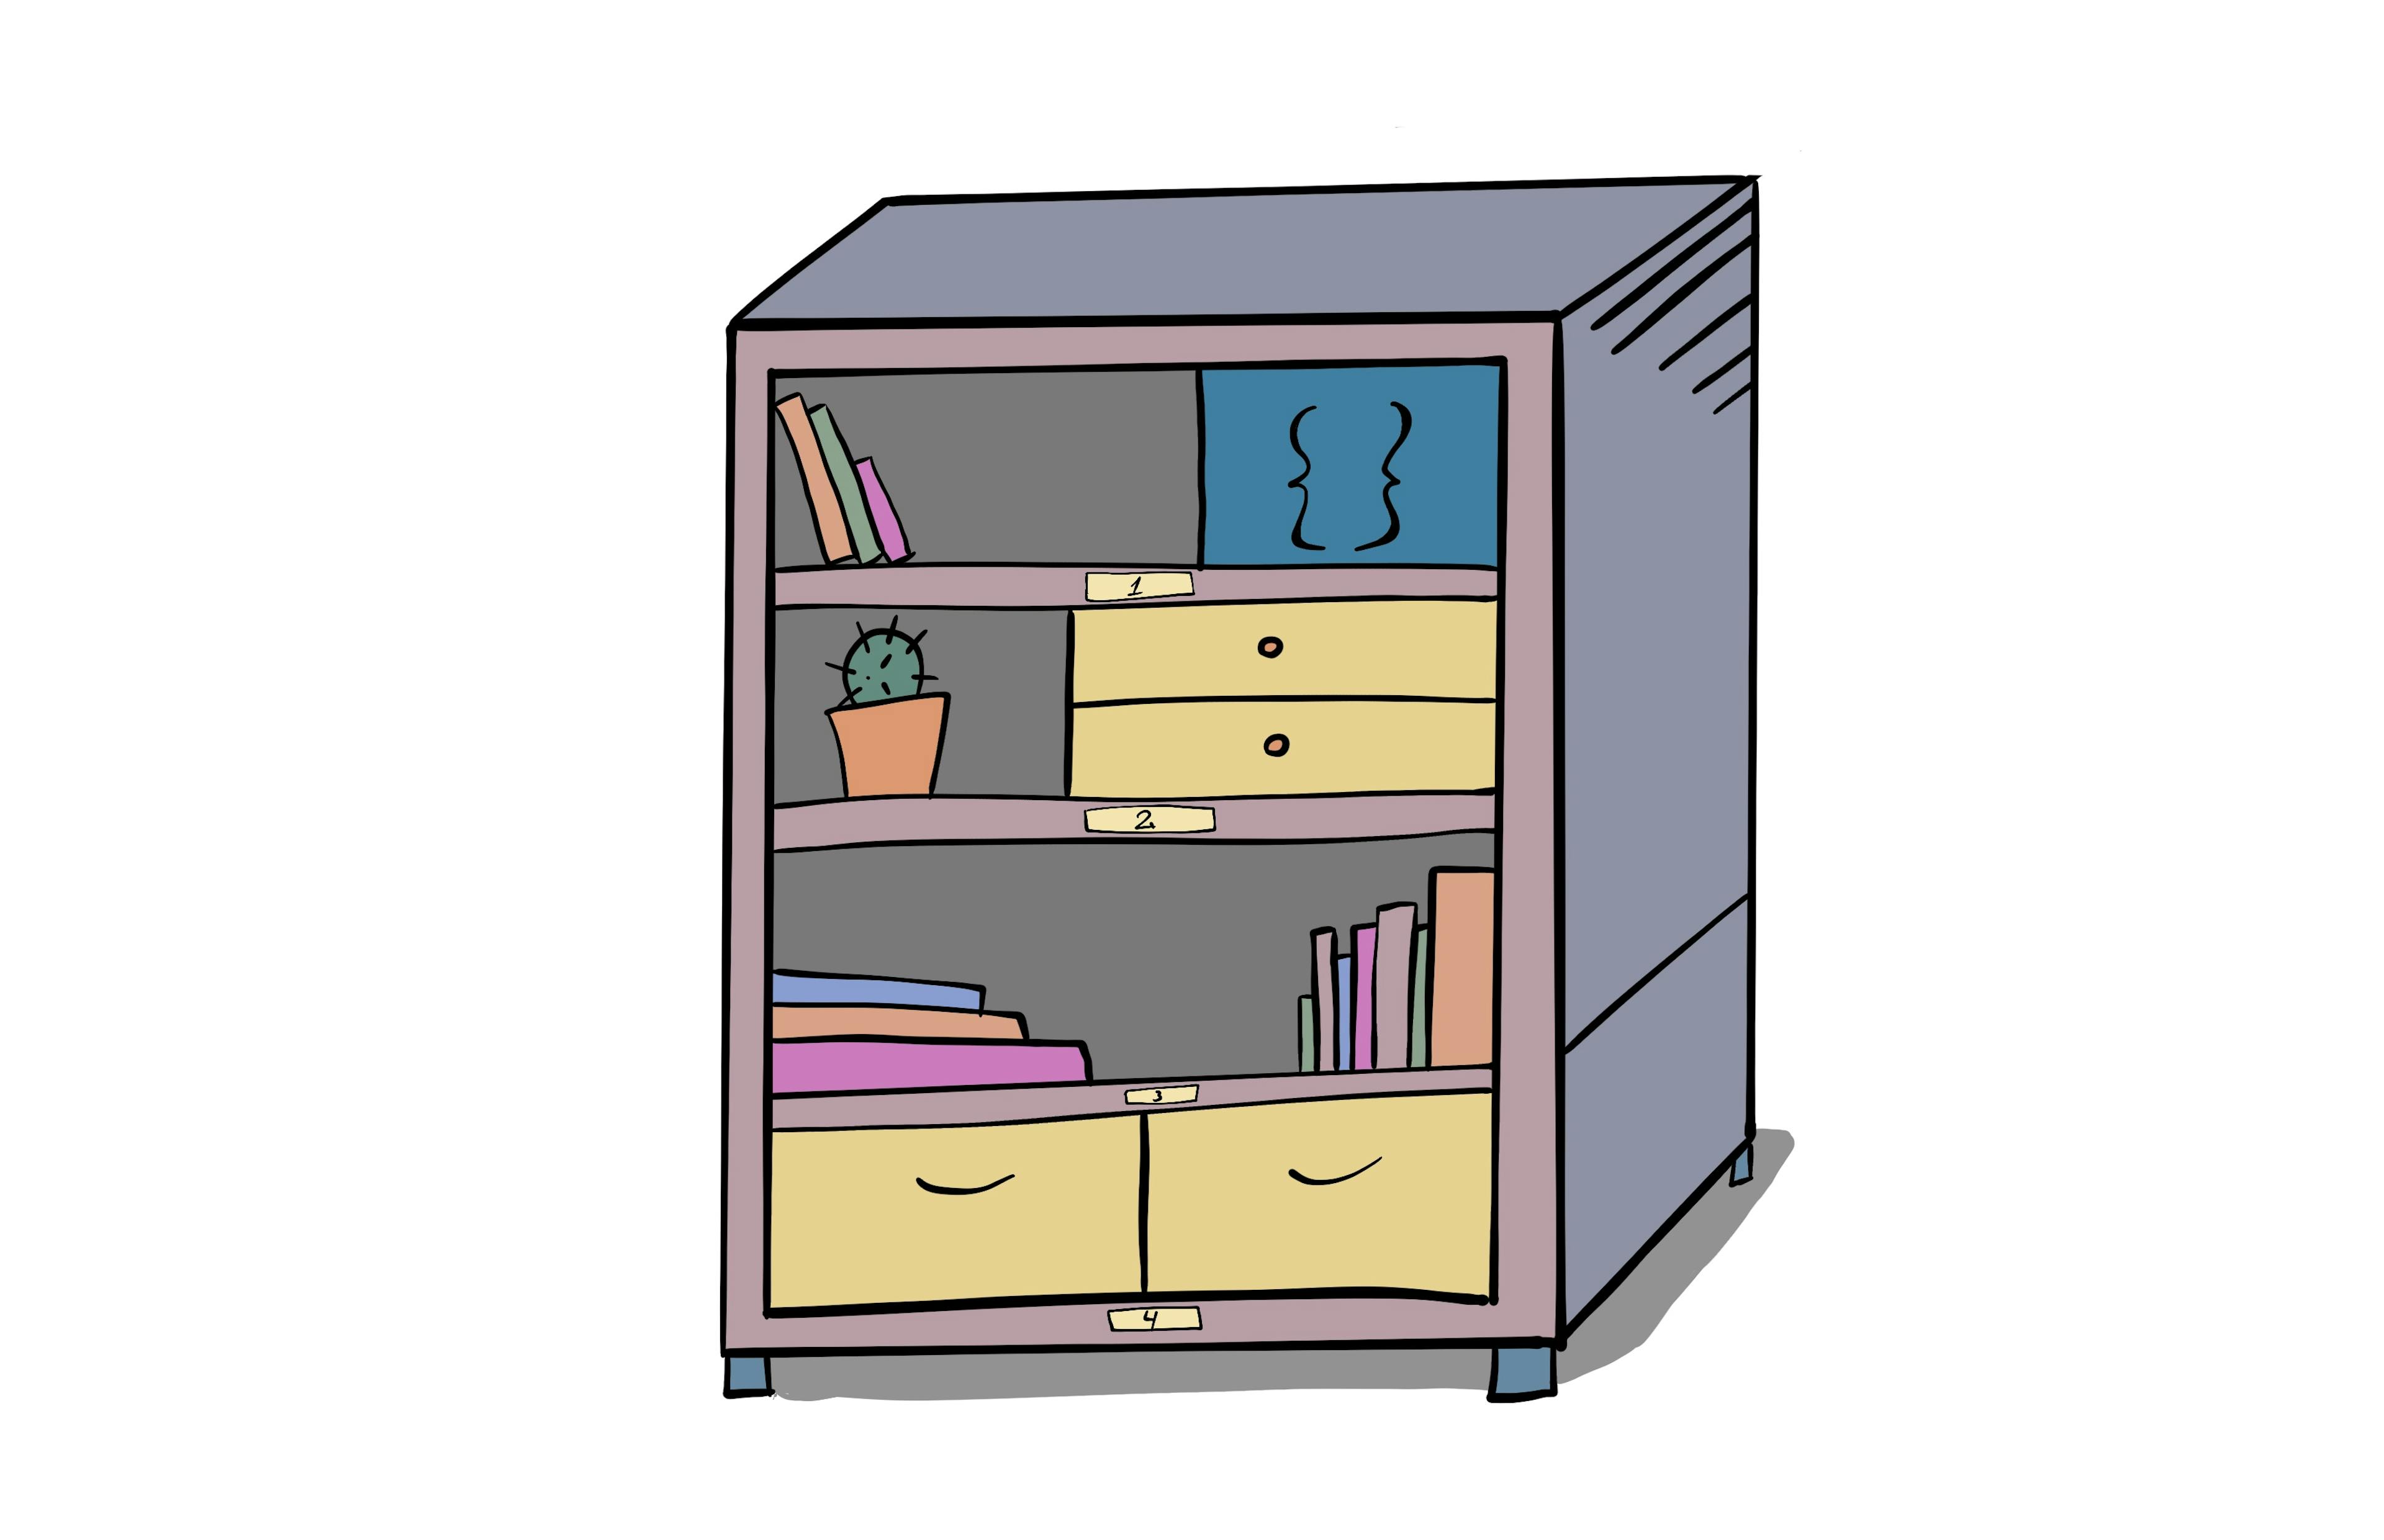 An object on the bookshelf